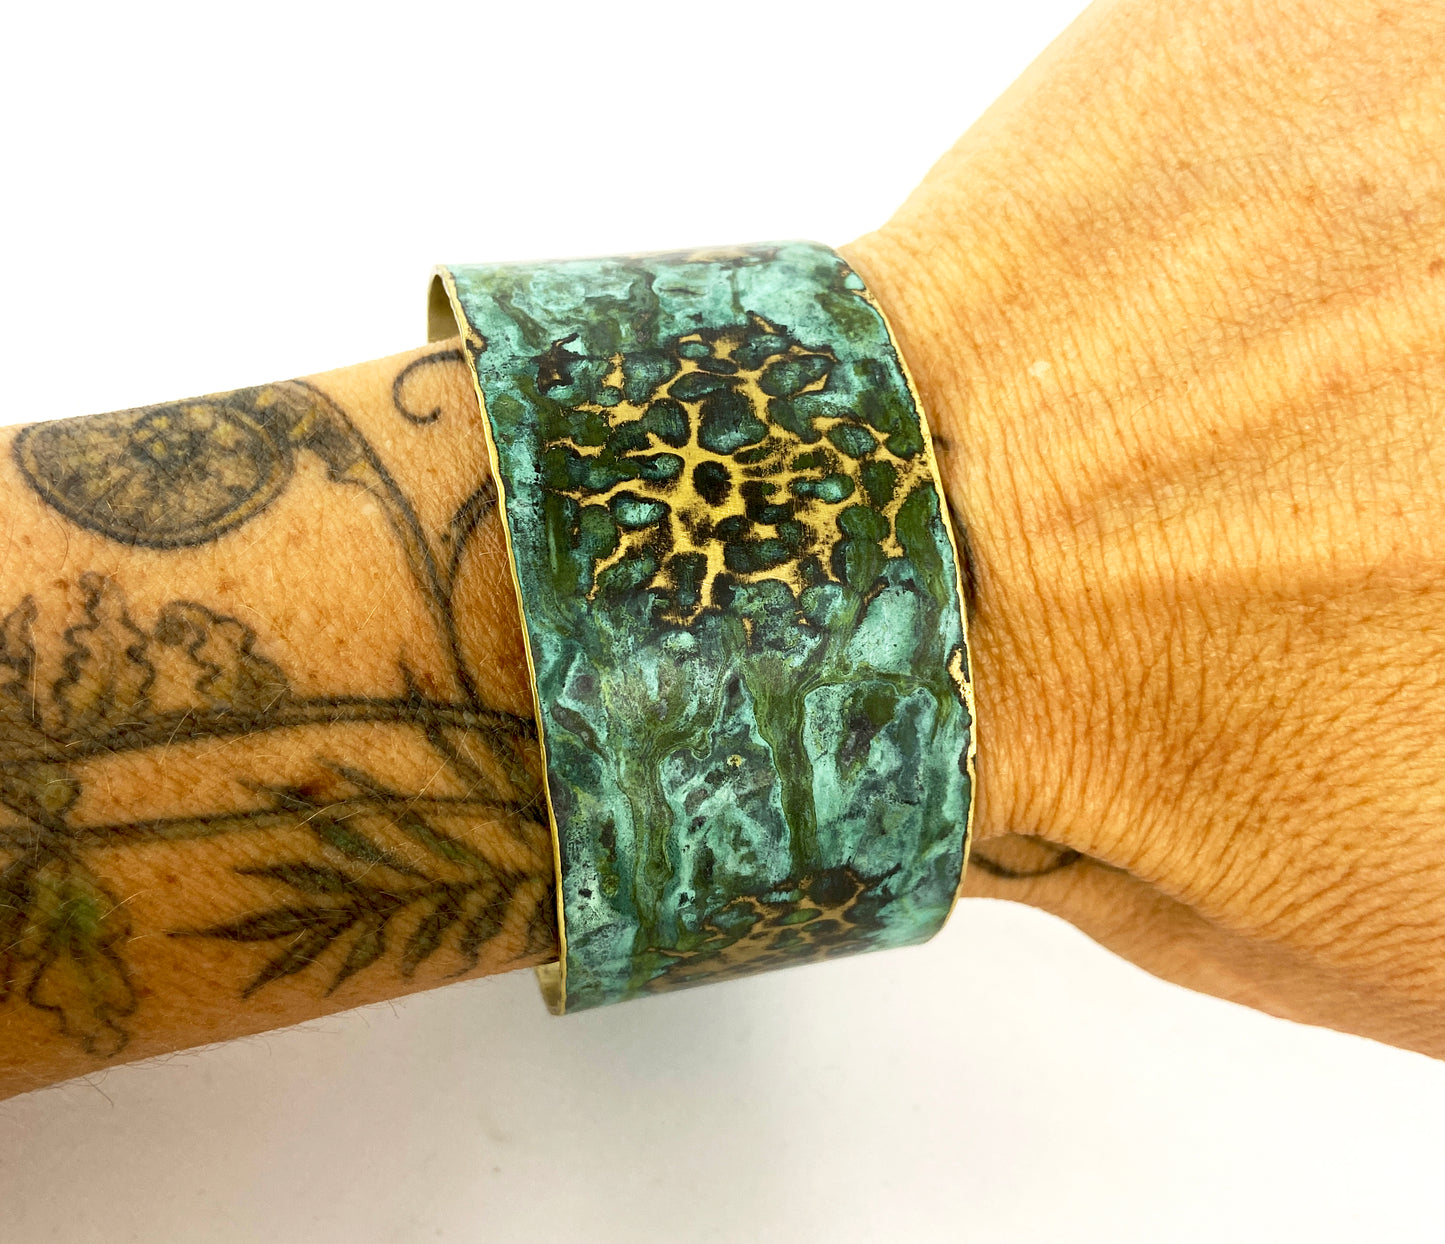 Hammered Green "Crackle" Brass Cuff Bracelet